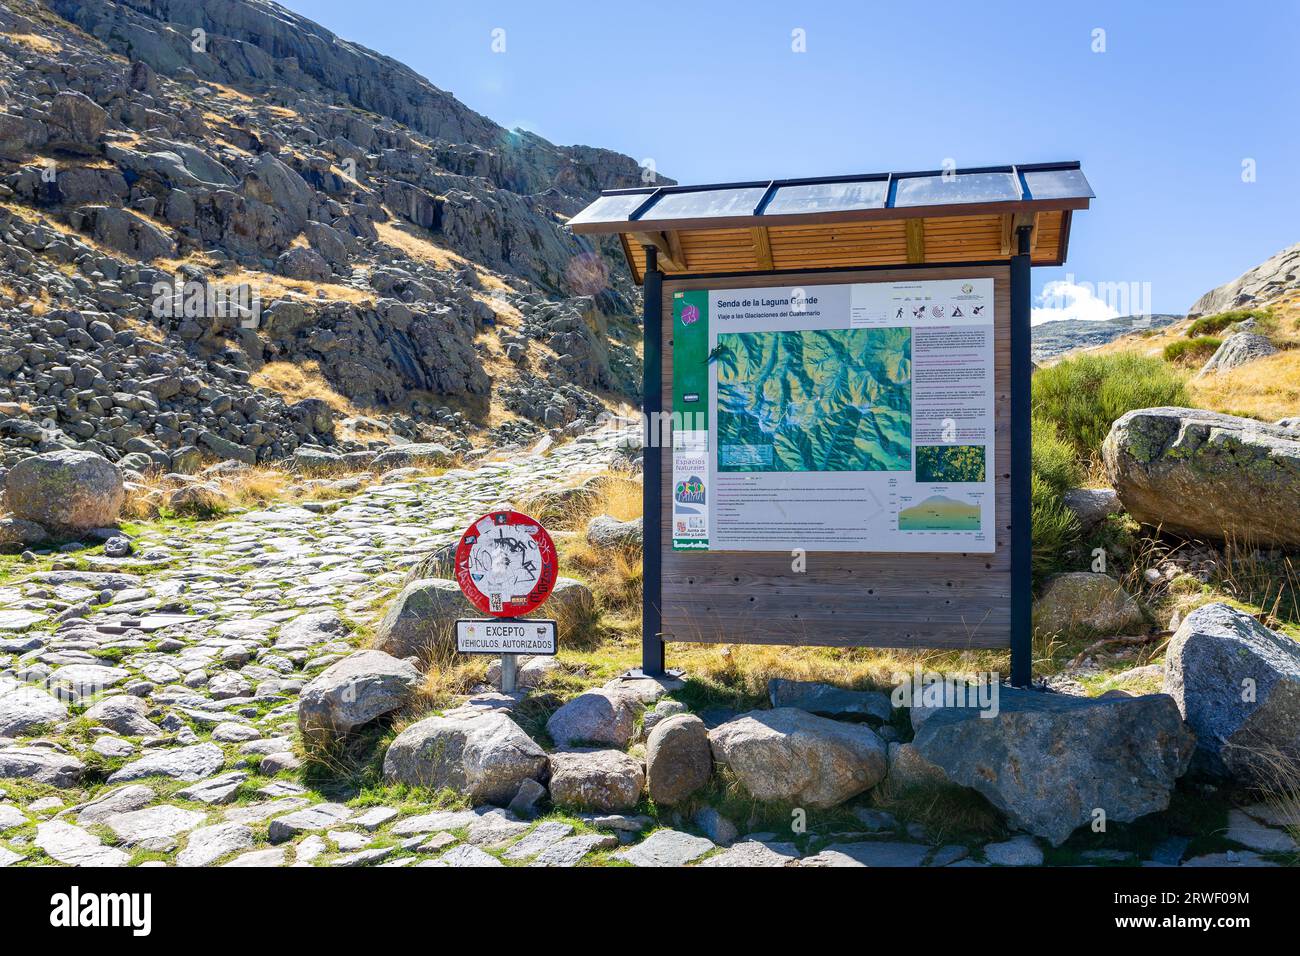 Plataforma de Gredos, Spain, 04.10.21. Tourist information board in Plataforma de Gredos, entrance to the Regional Park of the Sierra de Gredos. Stock Photo